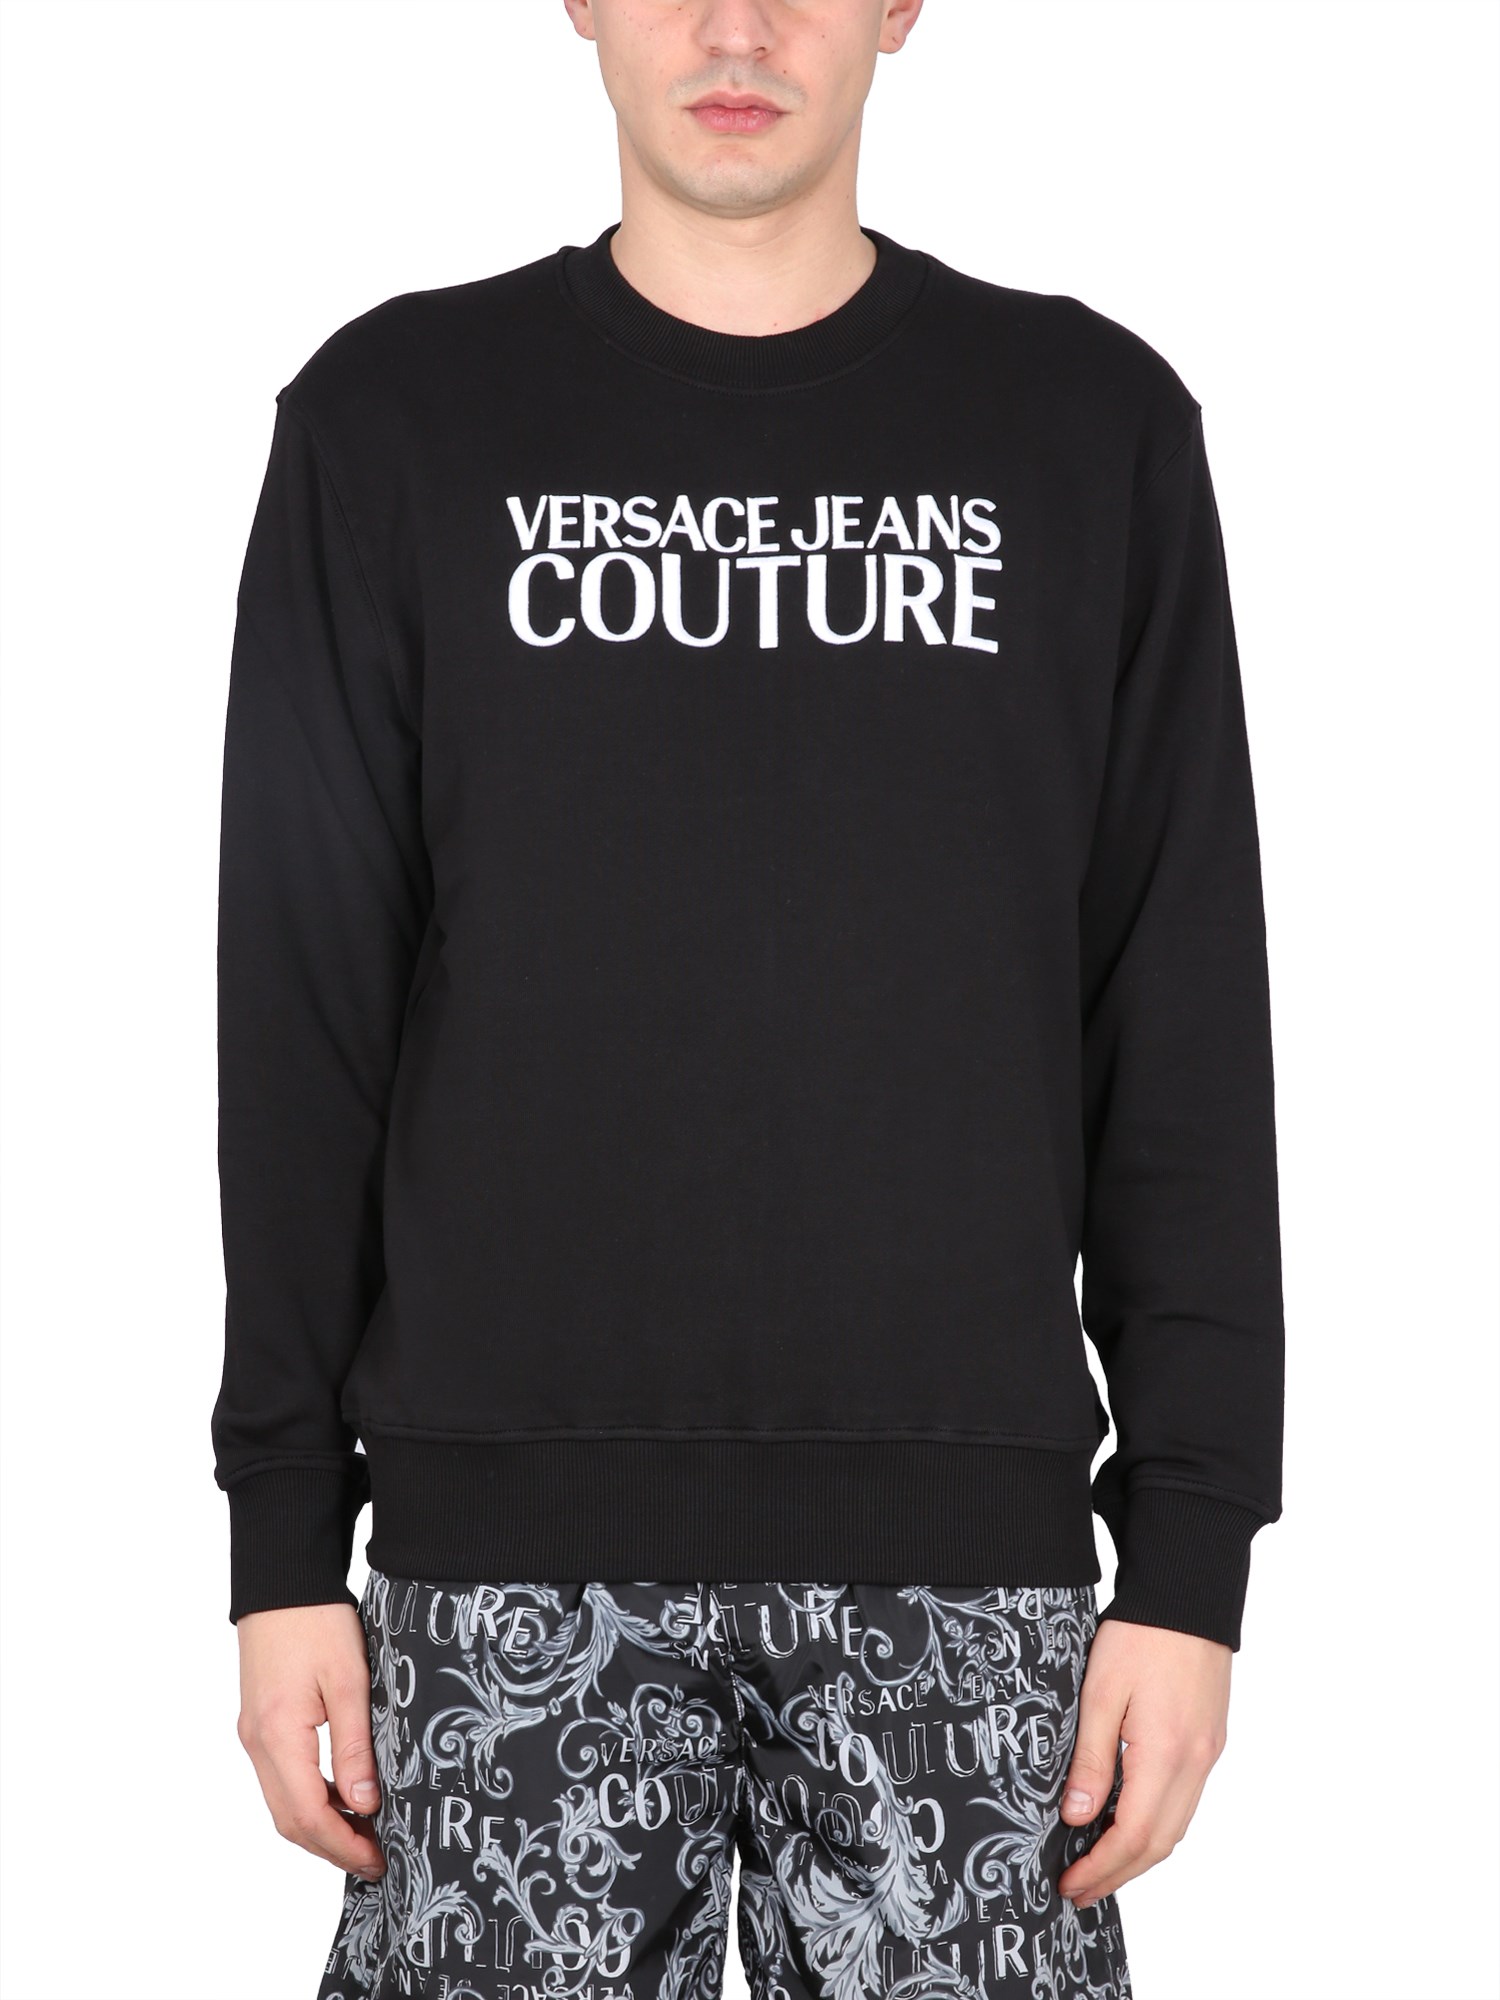 versace jeans couture crewneck sweatshirt